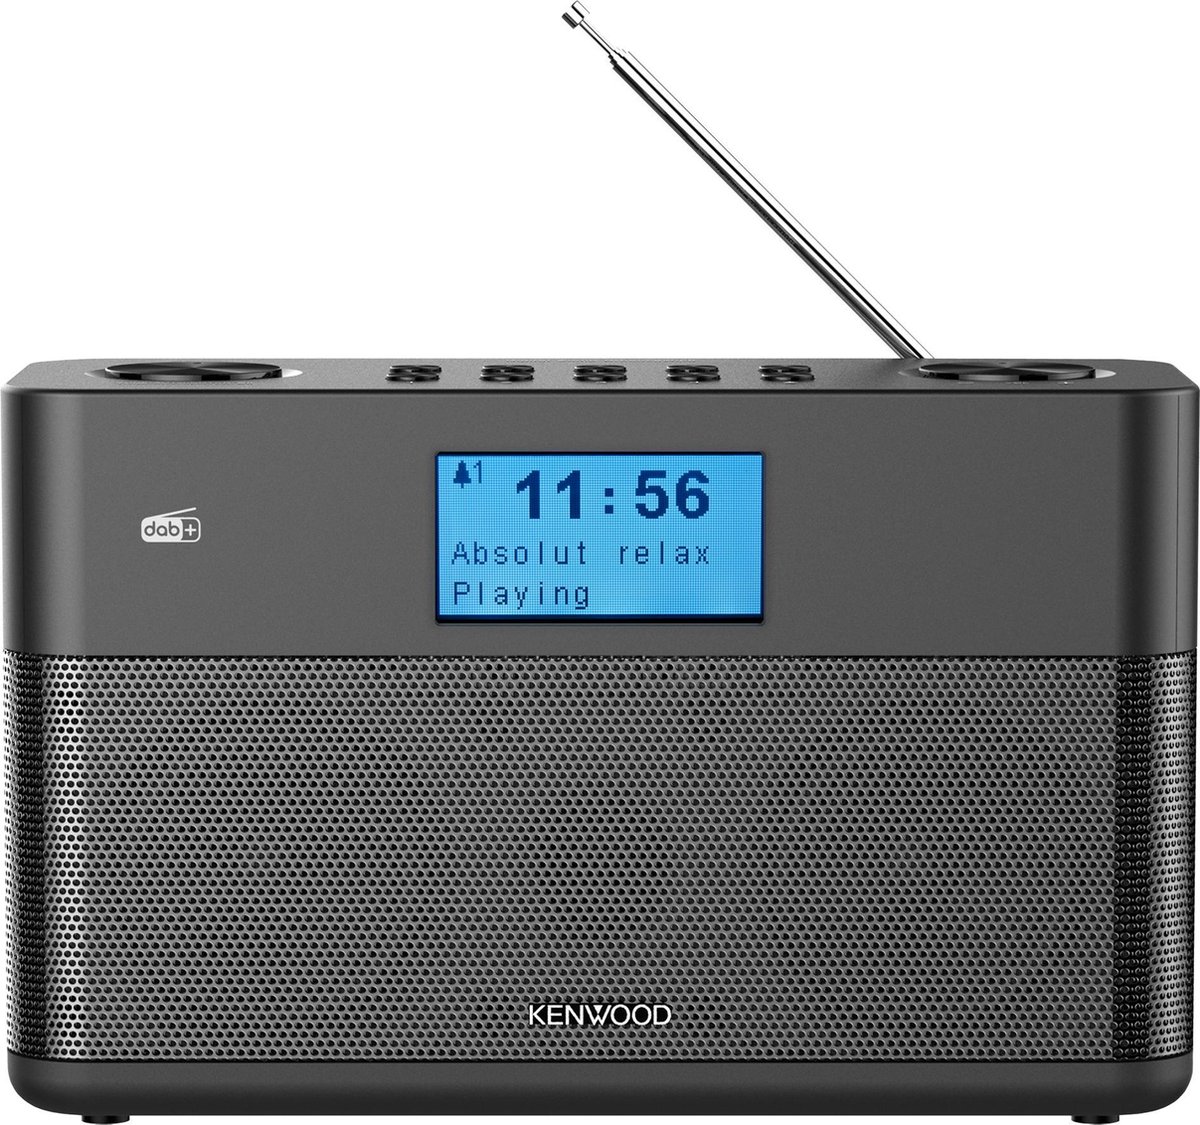 Worden Gluren toespraak Kenwood CR-ST50-DAB - Compacte Stereo DAB+ Radio - Zwart | bol.com